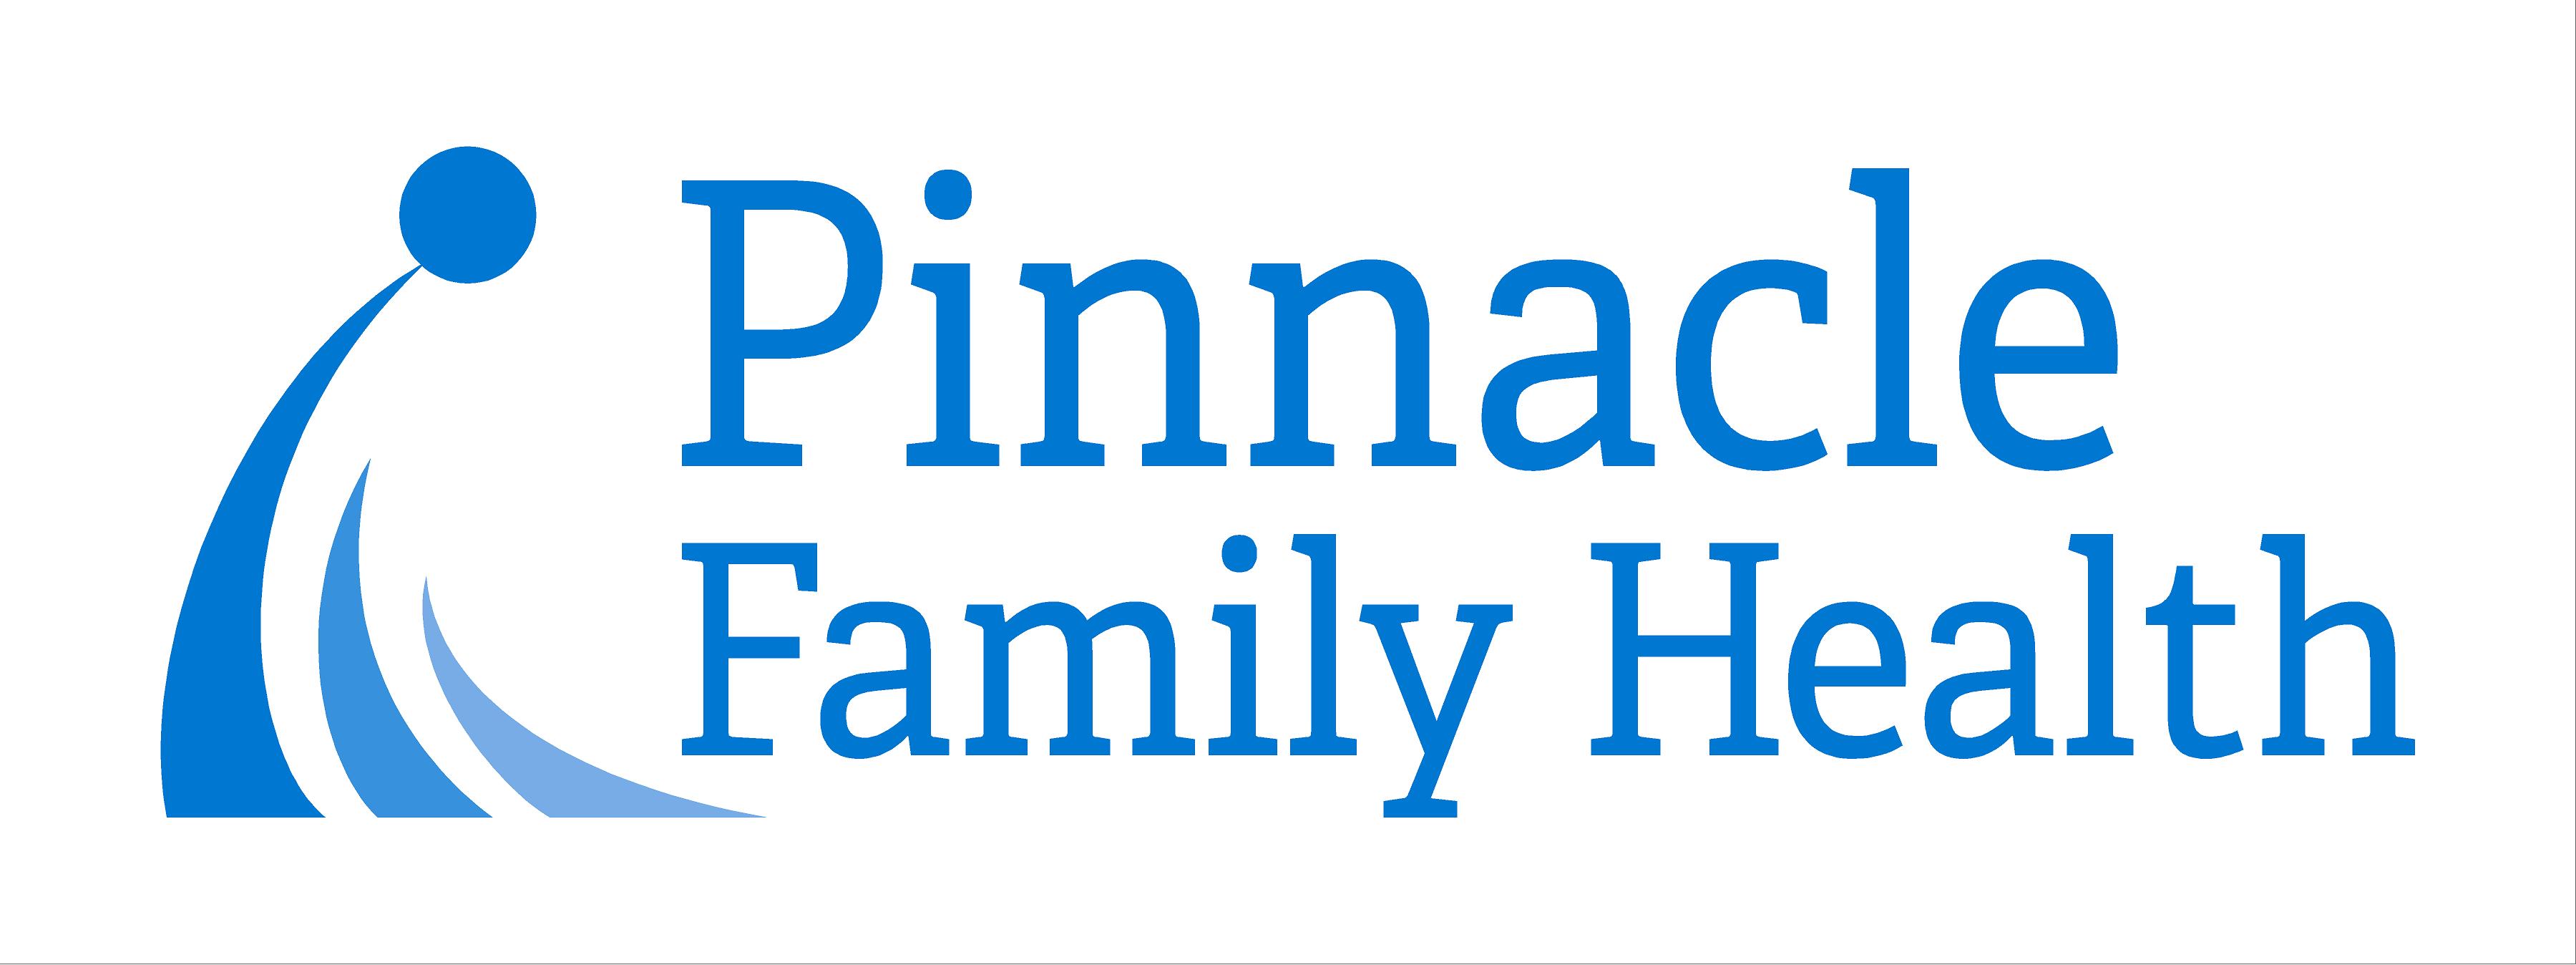 Pinnacle Family Health Loxahatchee (561)672-8396